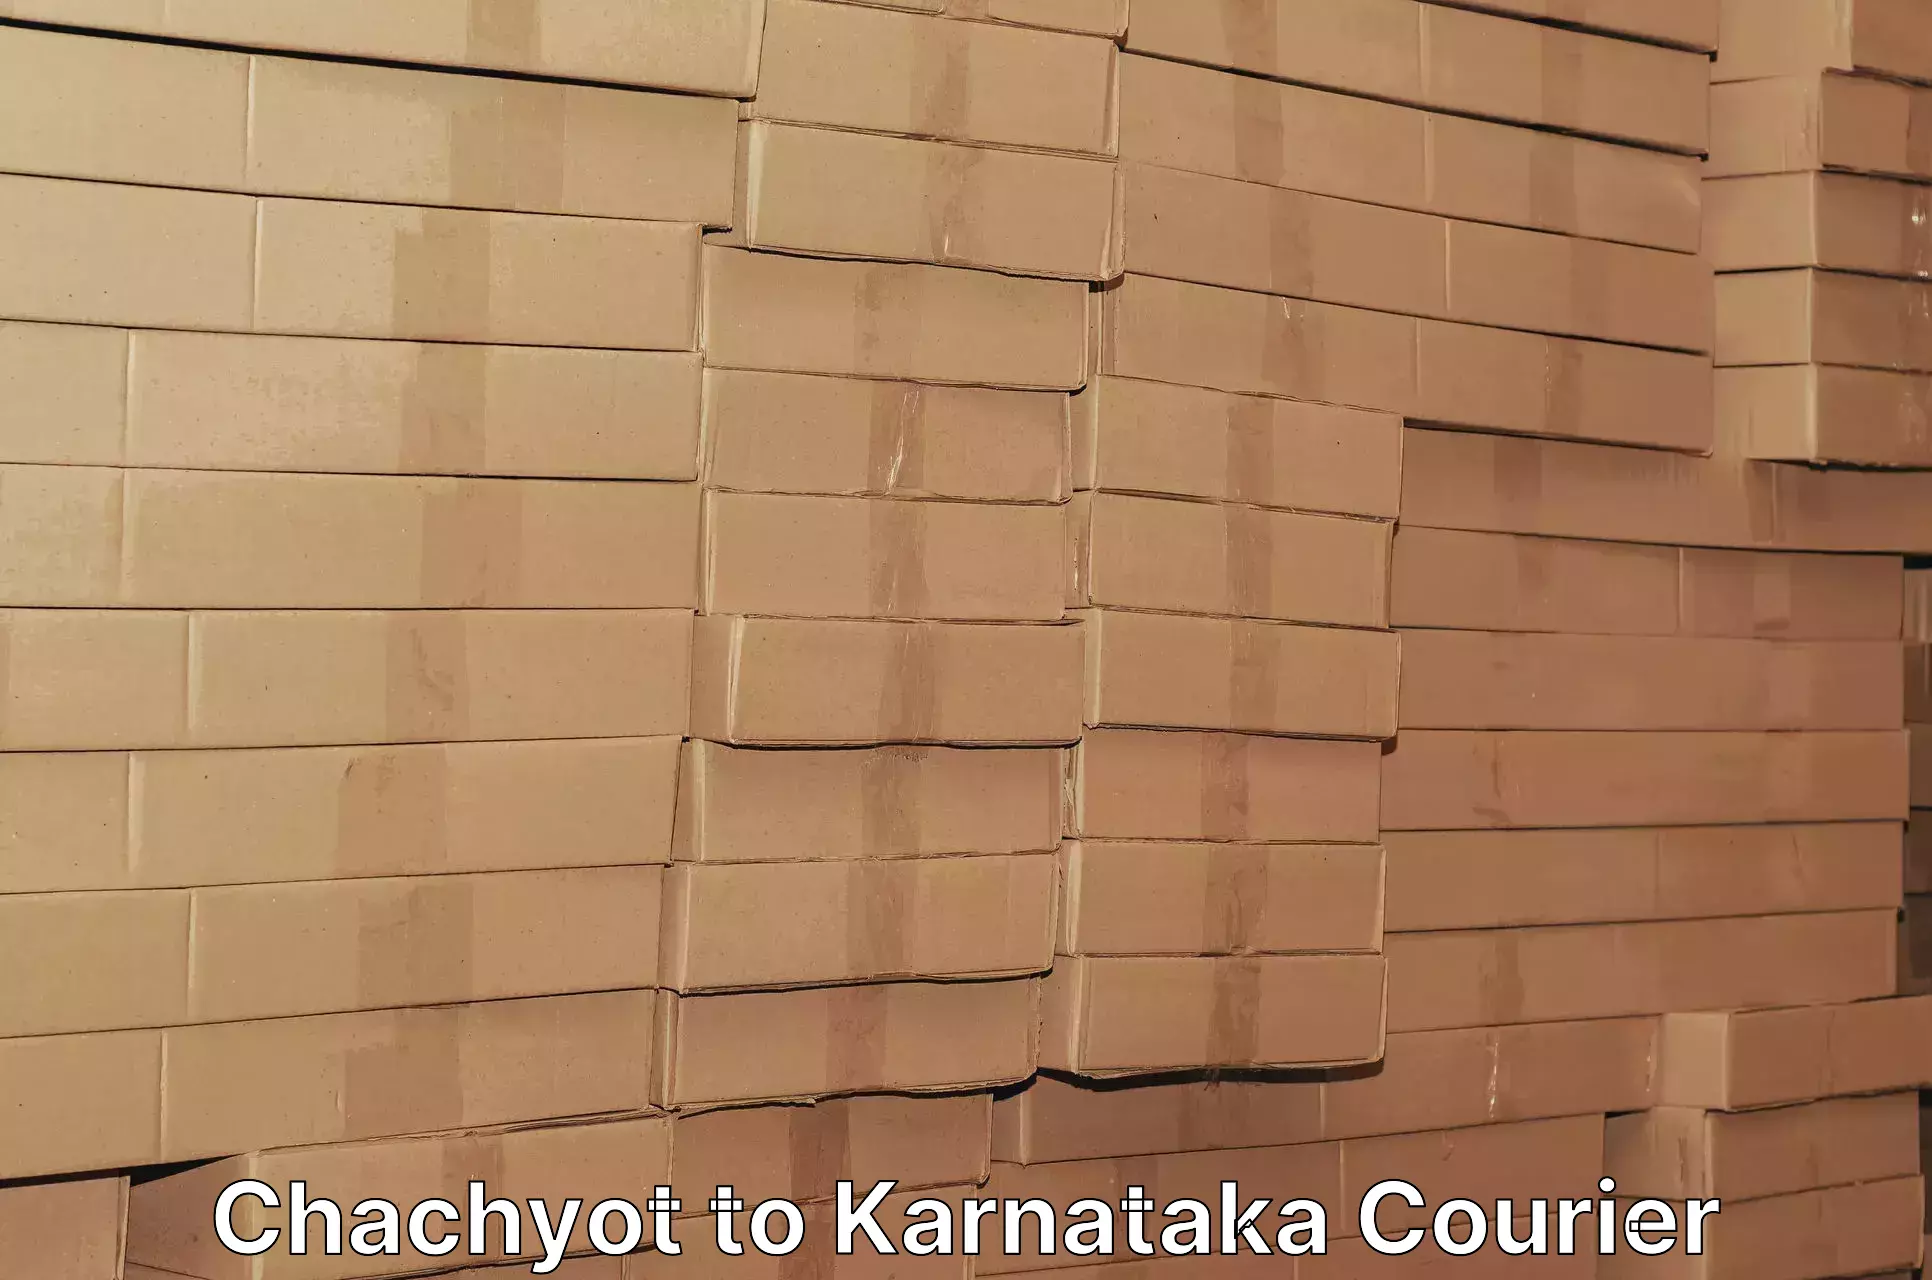 On-demand courier Chachyot to Karnataka